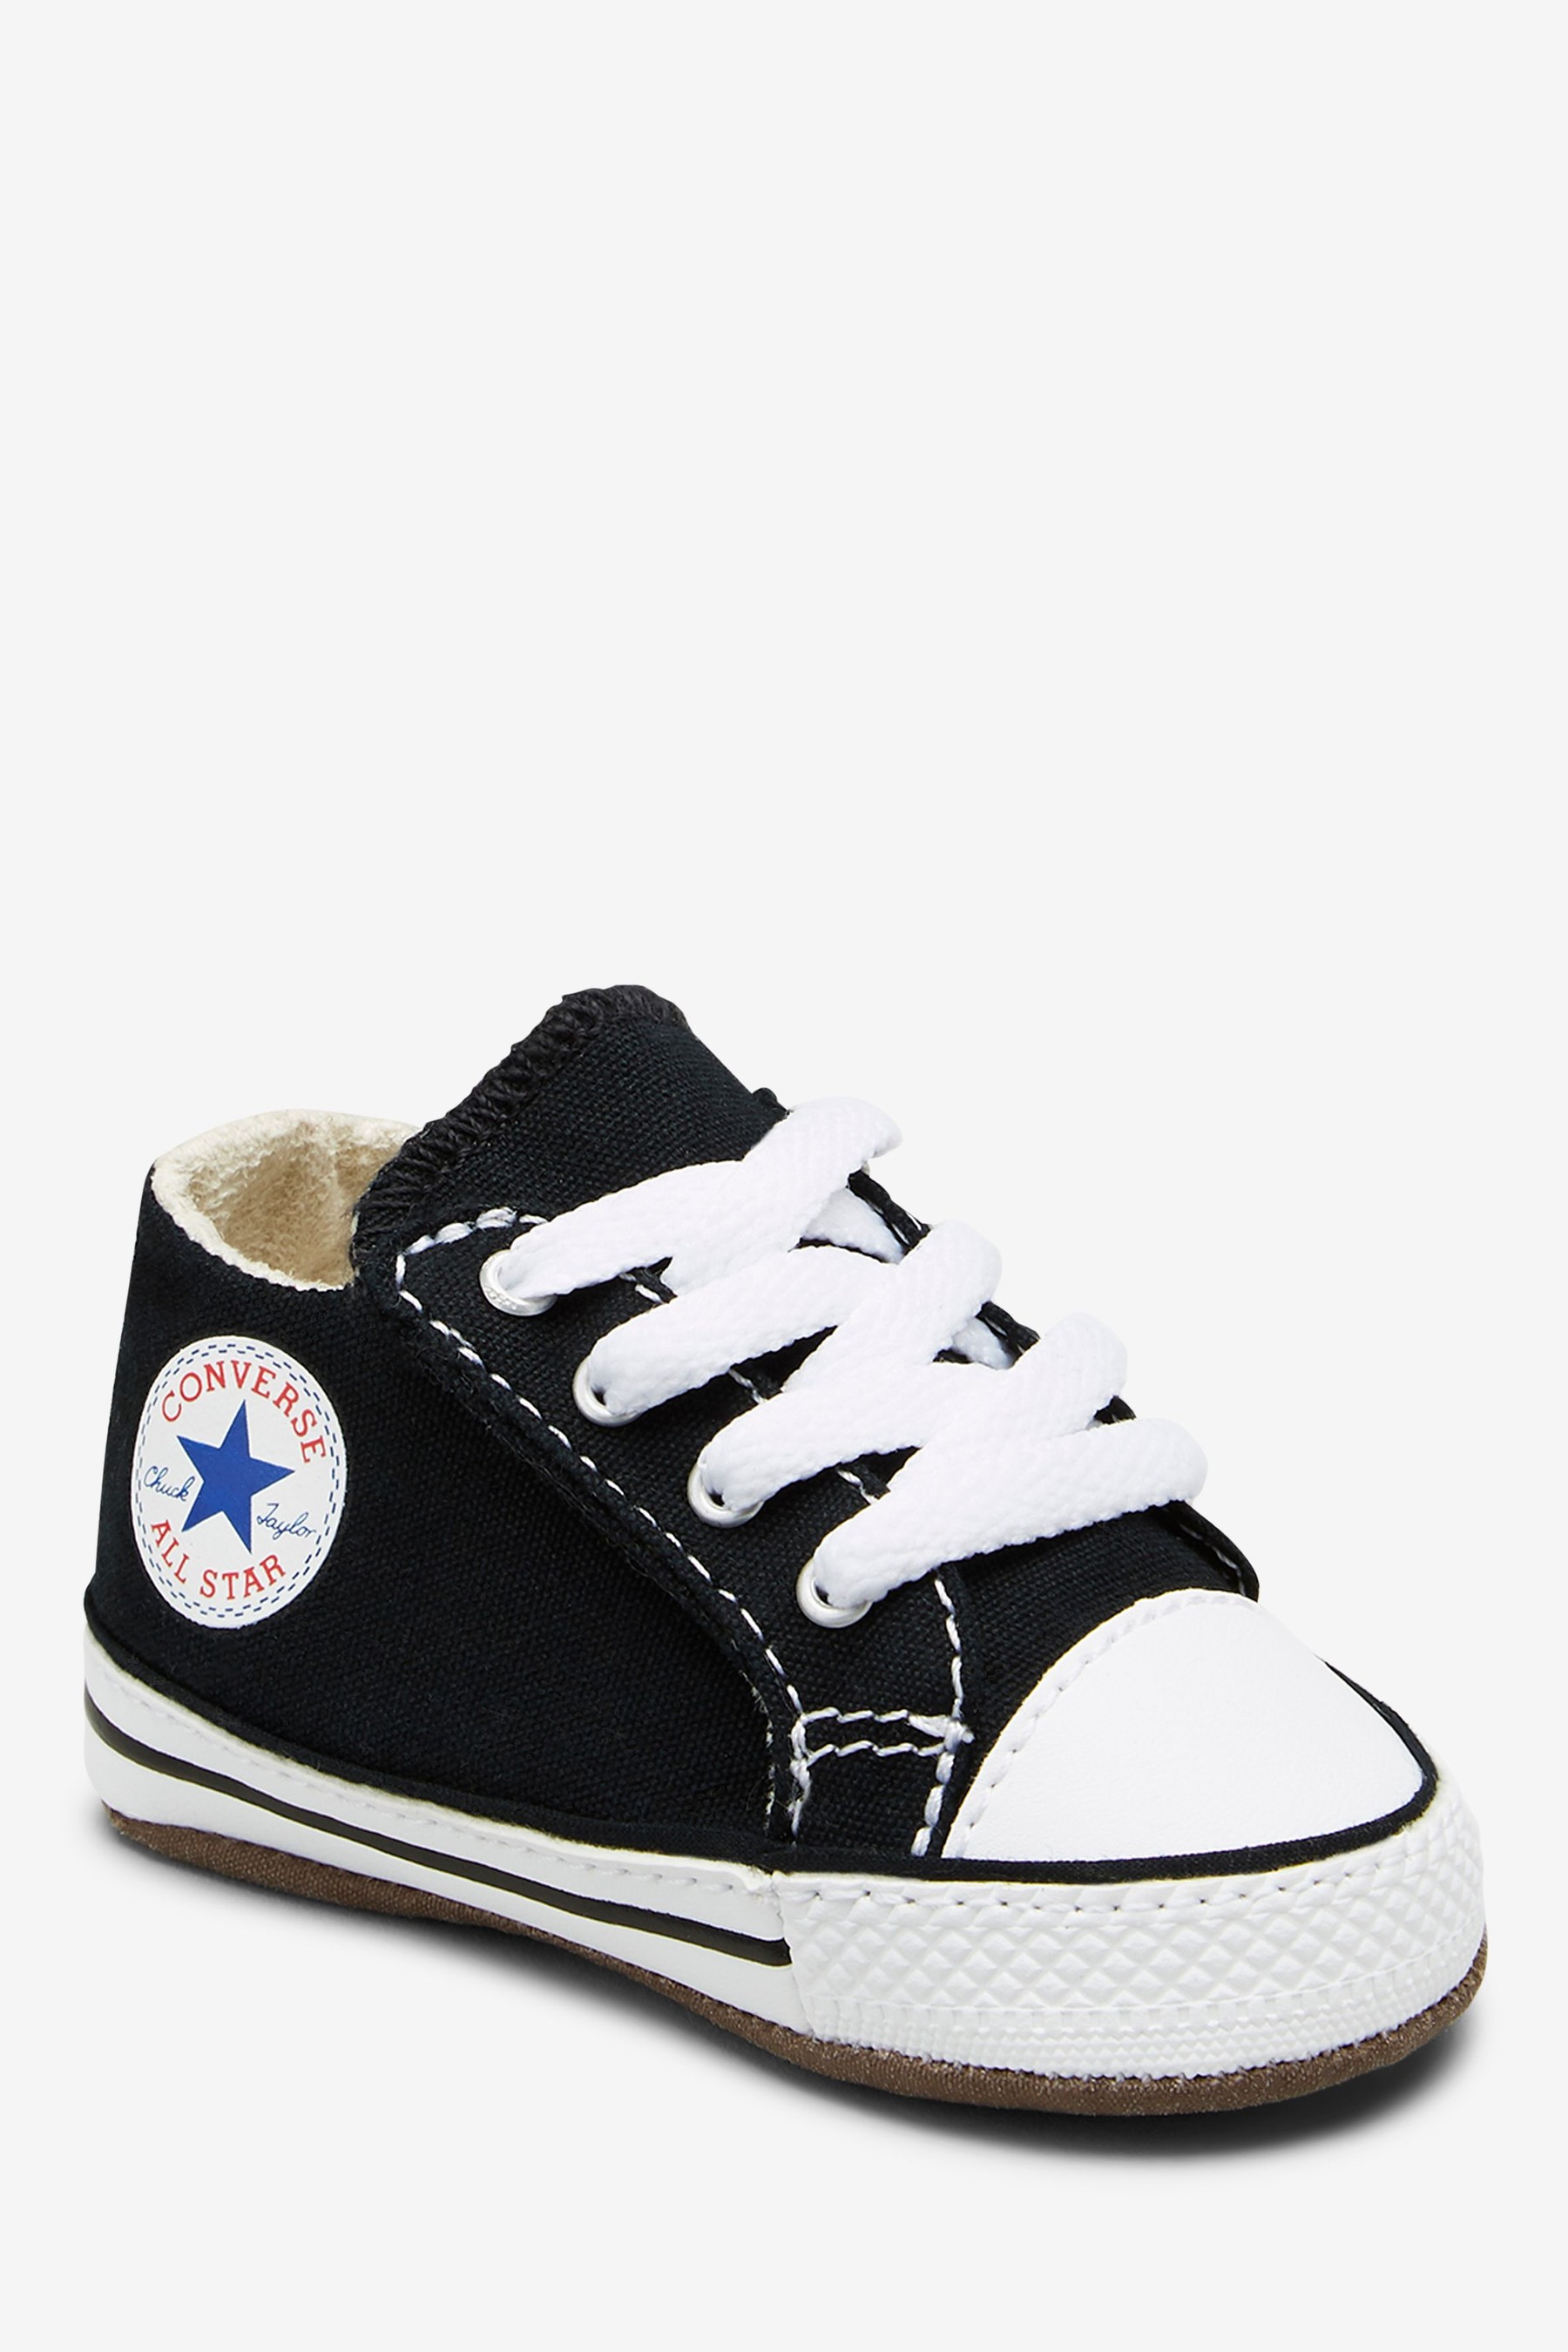 Converse Chuck Taylor All Star Pram Shoes